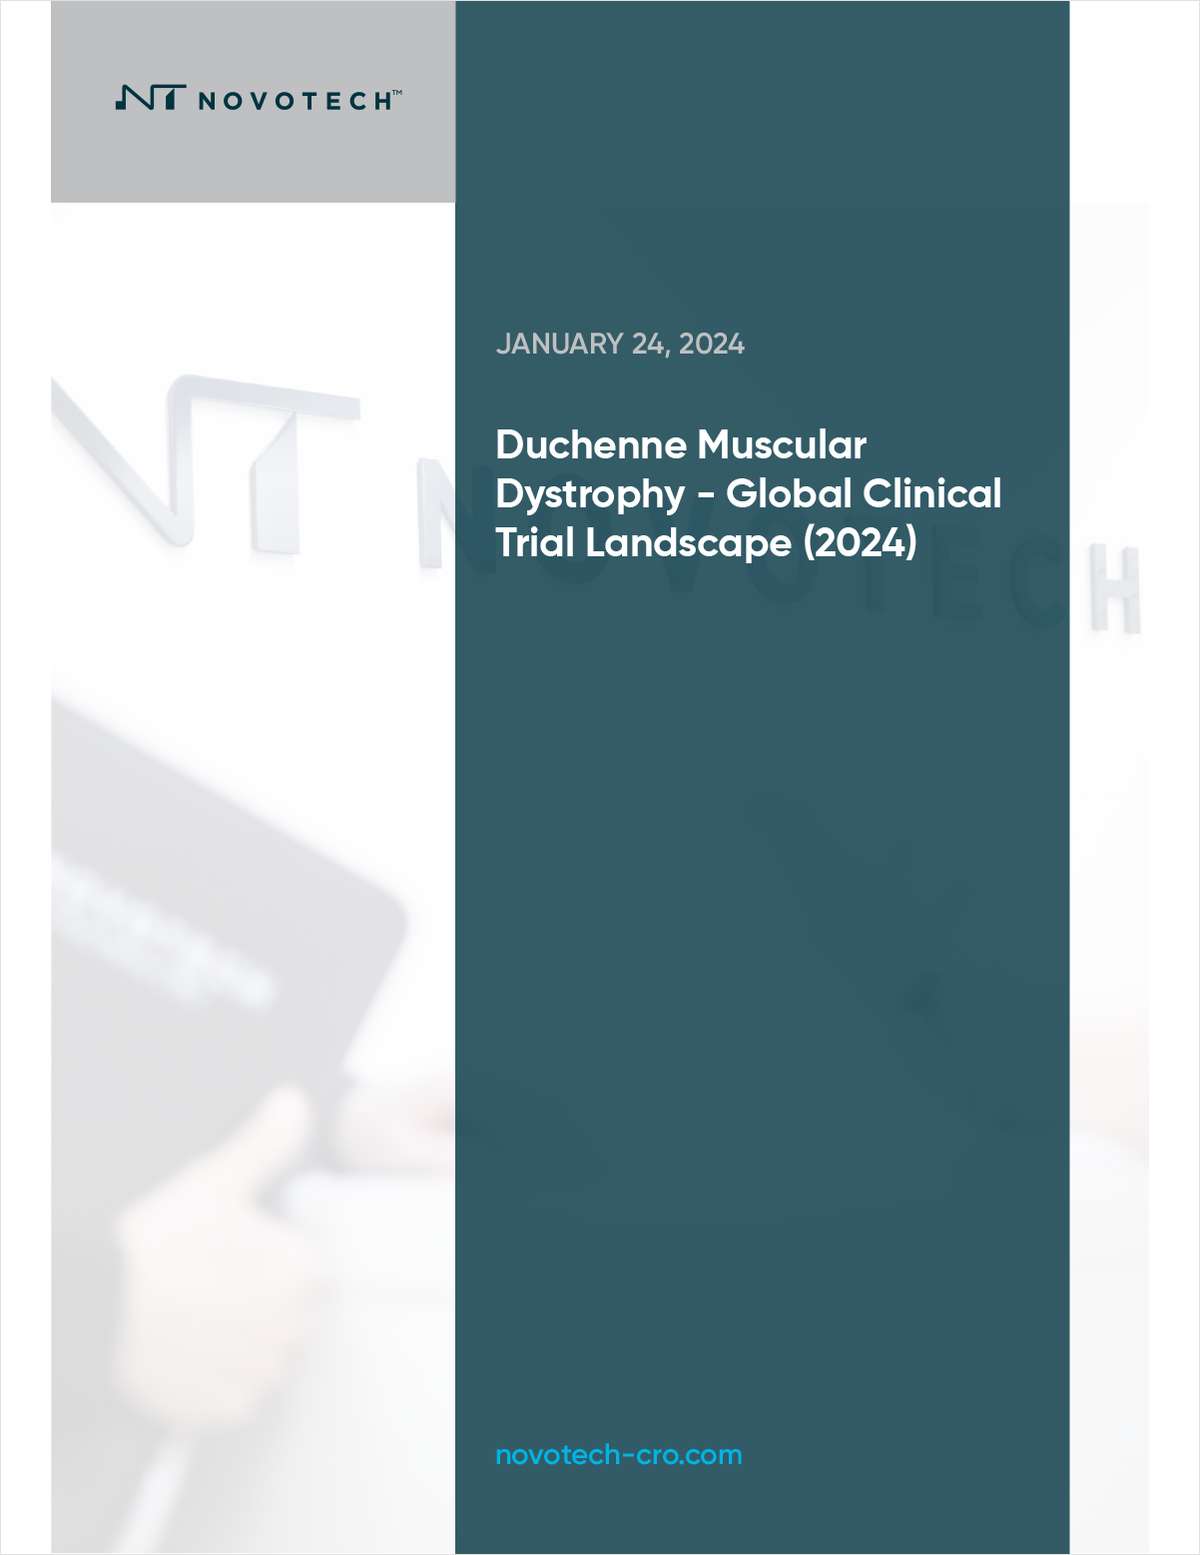 Duchenne Muscular Dystrophy - Global Clinical Trial Landscape